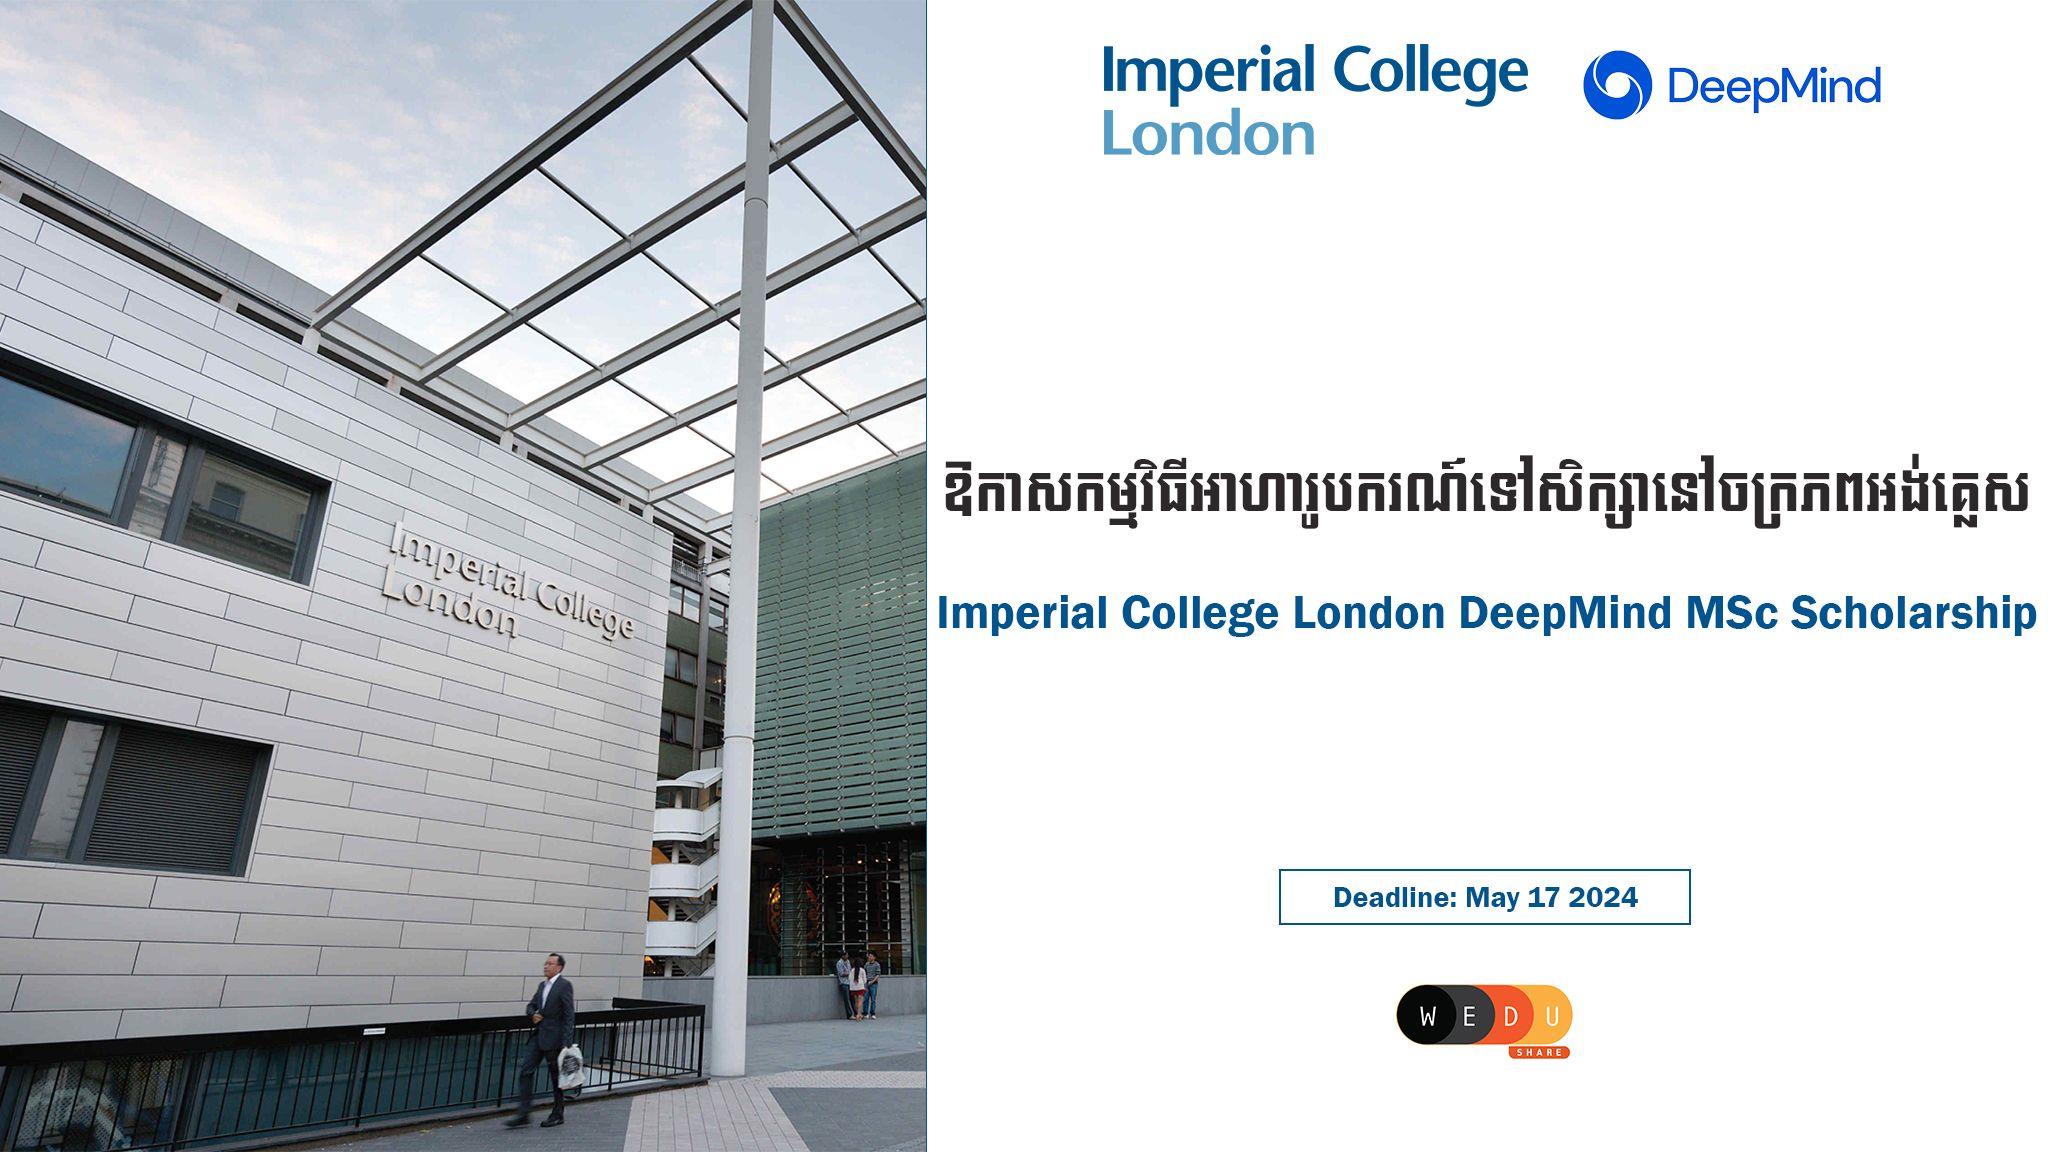 Imperial College London DeepMind MSc Scholarship